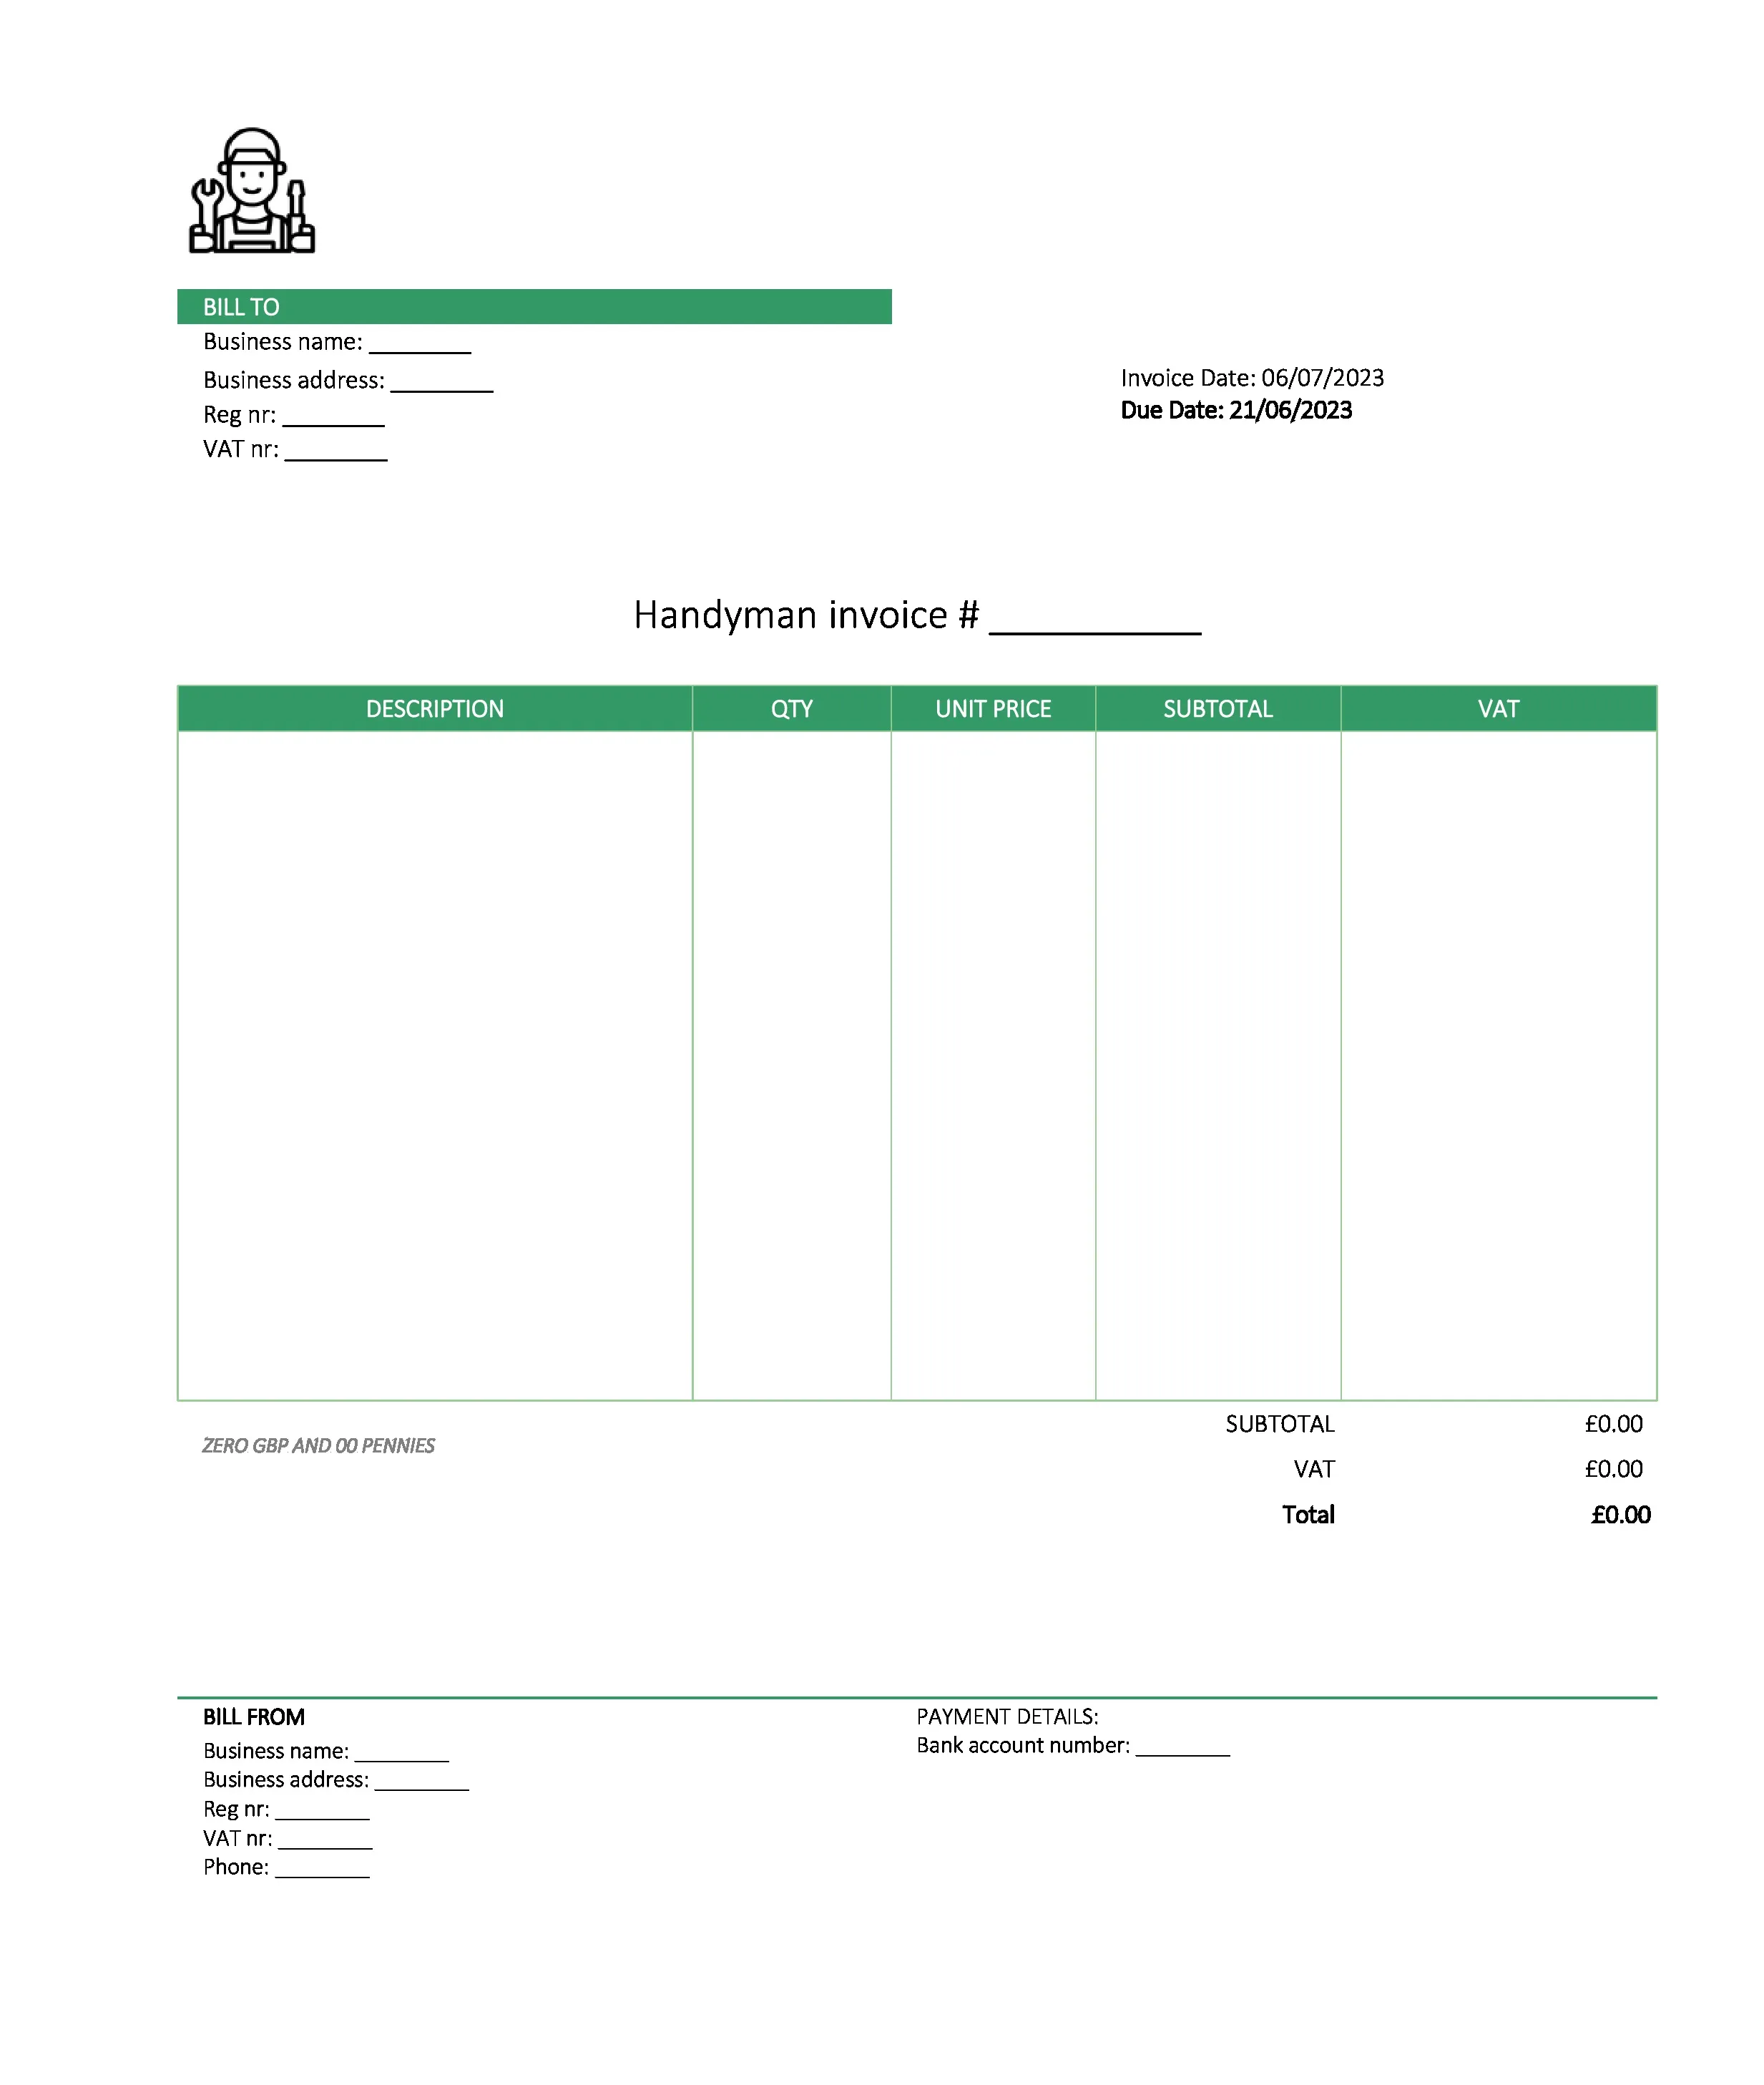 digital handyman invoice template UK Excel / Google sheets